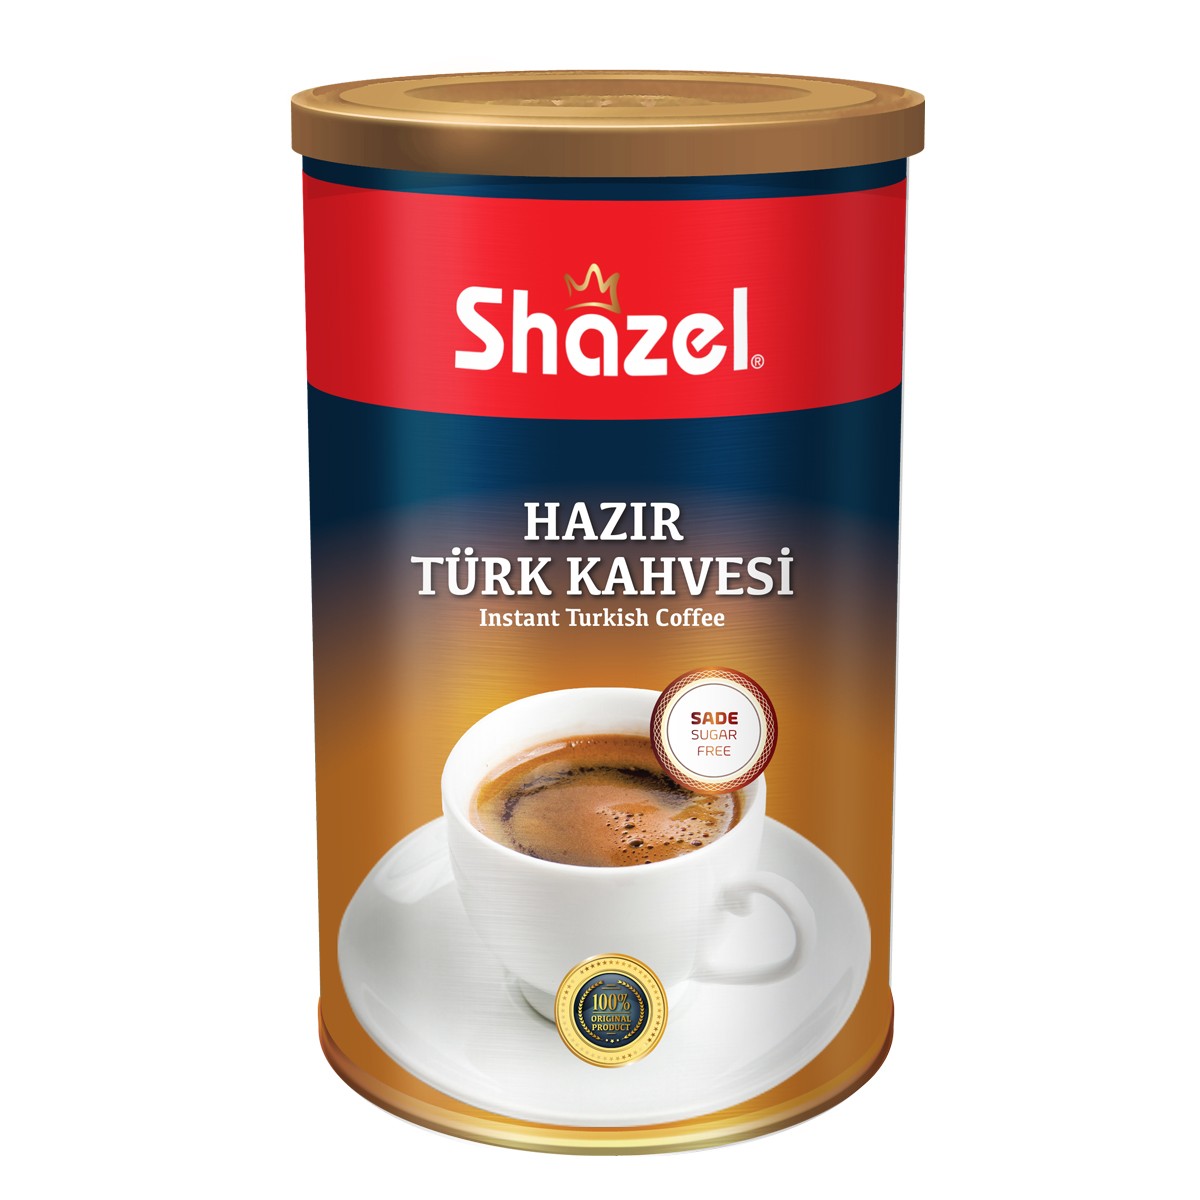 Hazır Türk Kahvesi sade 250 g teneke x 12 adet